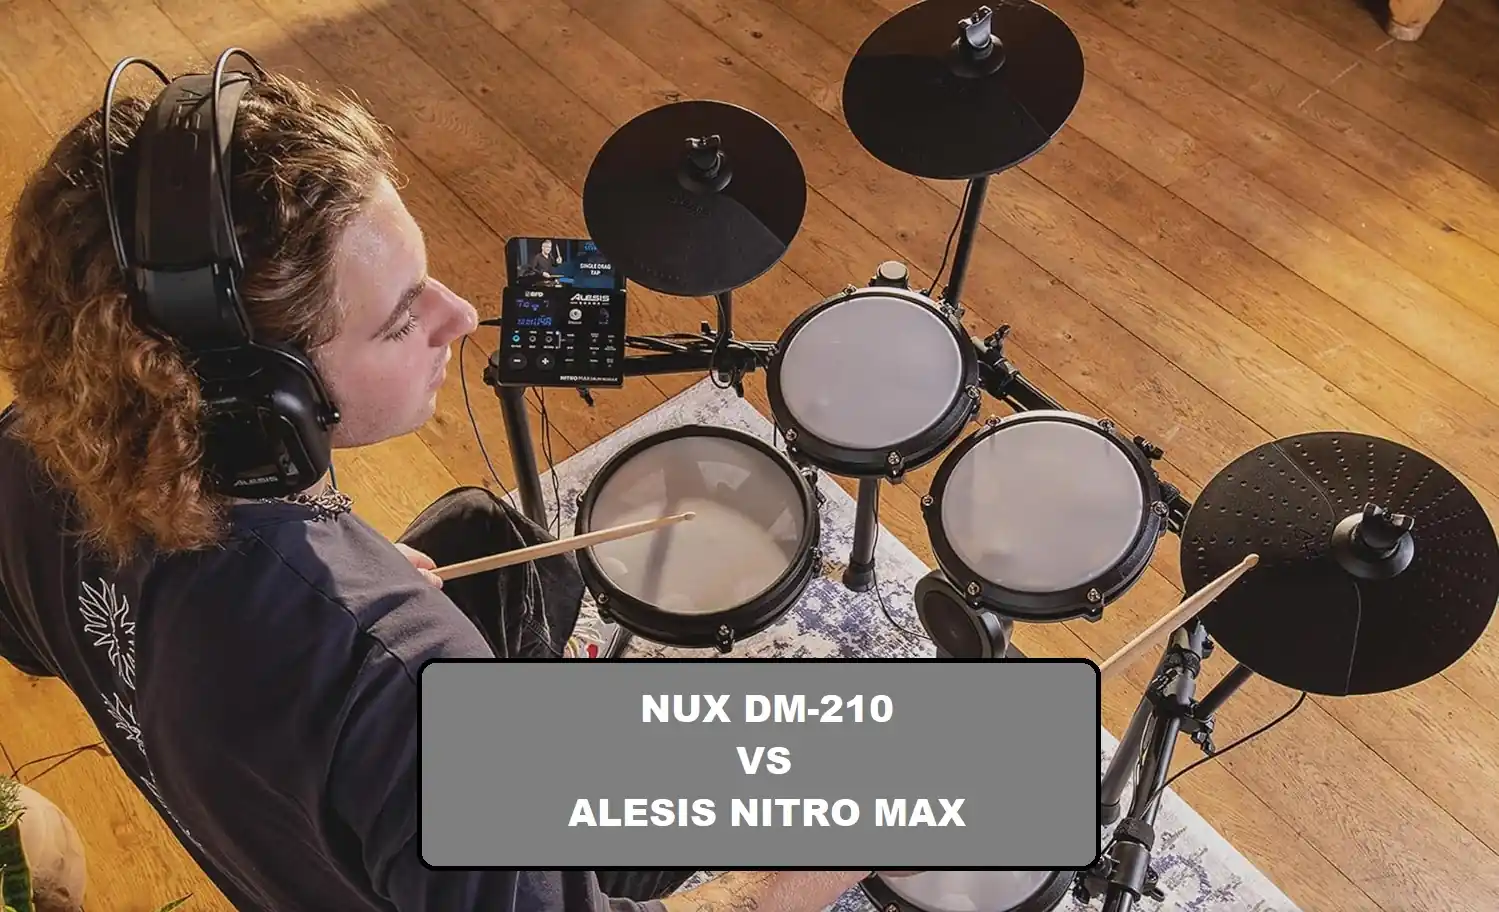 Nux DM-210 vs Alesis Nitro Max